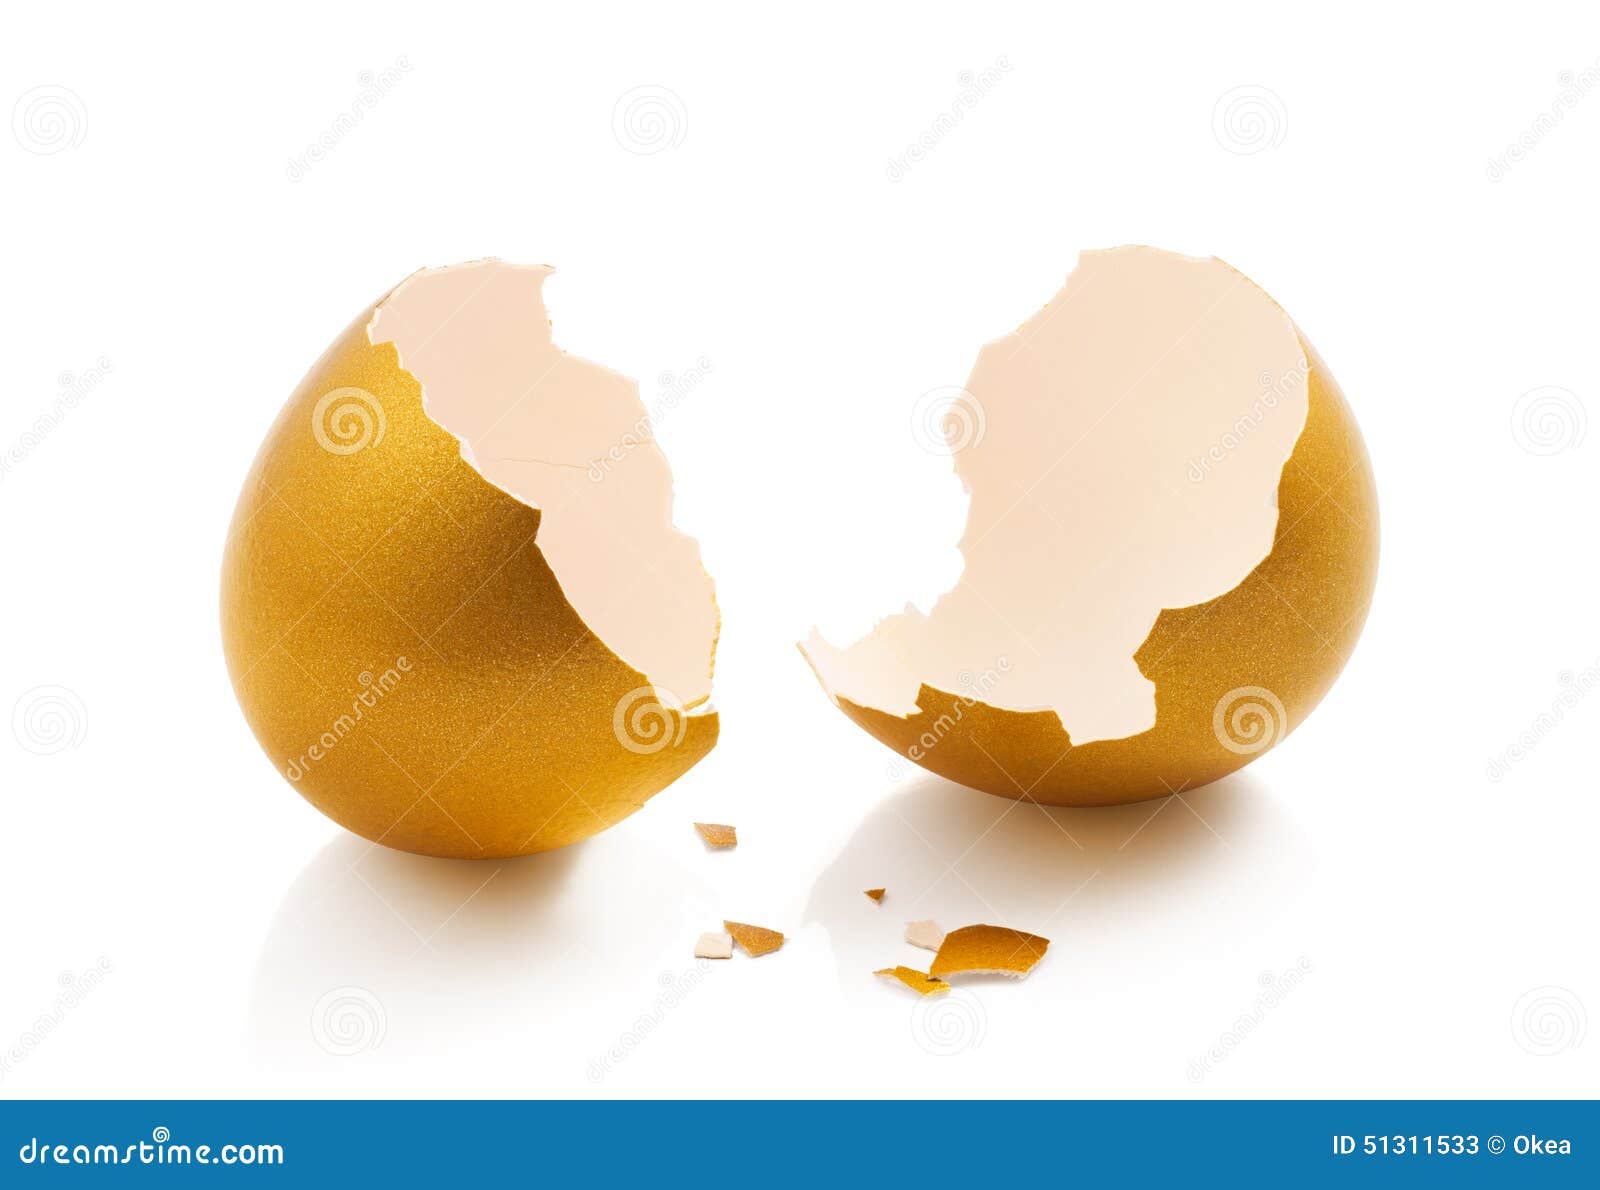 Broken Golden Egg Royalty-Free Stock Photography | CartoonDealer.com ...